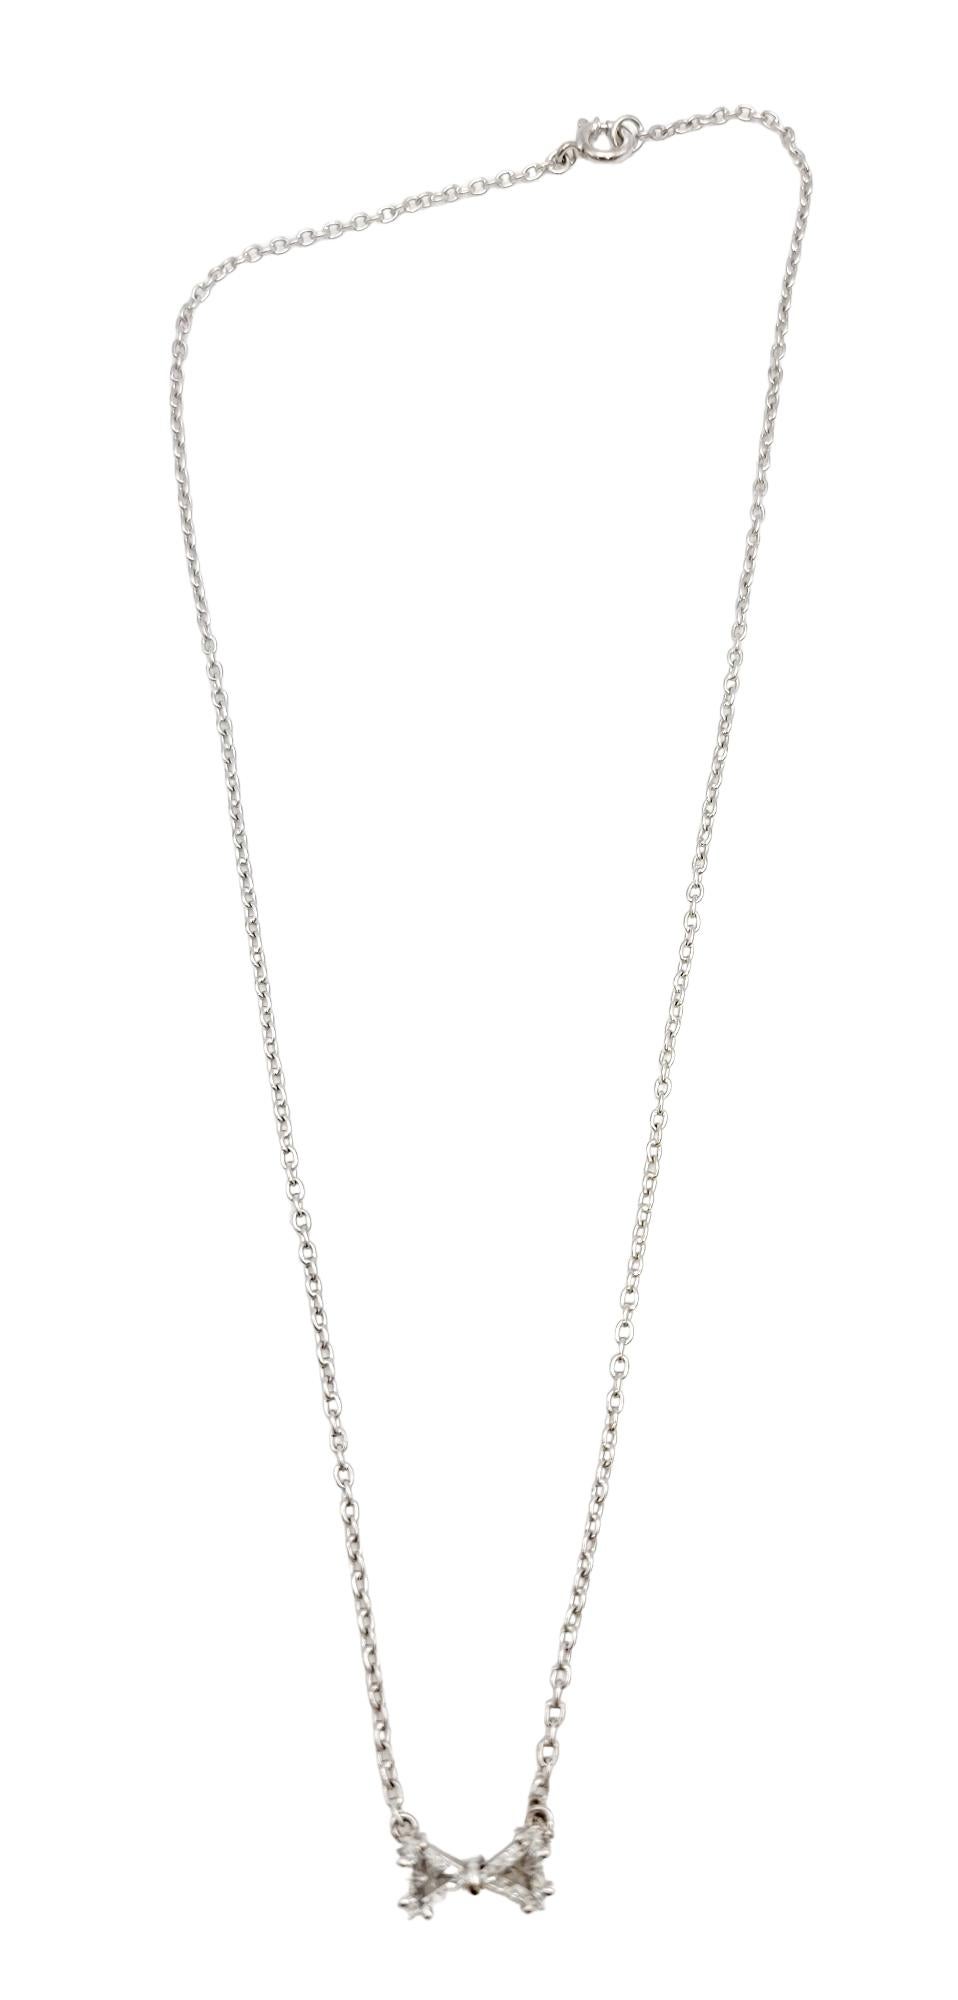 Trillion Cut Natural Diamond Bowtie Pendant Necklace in 18 Karat White Gold In Excellent Condition For Sale In Scottsdale, AZ